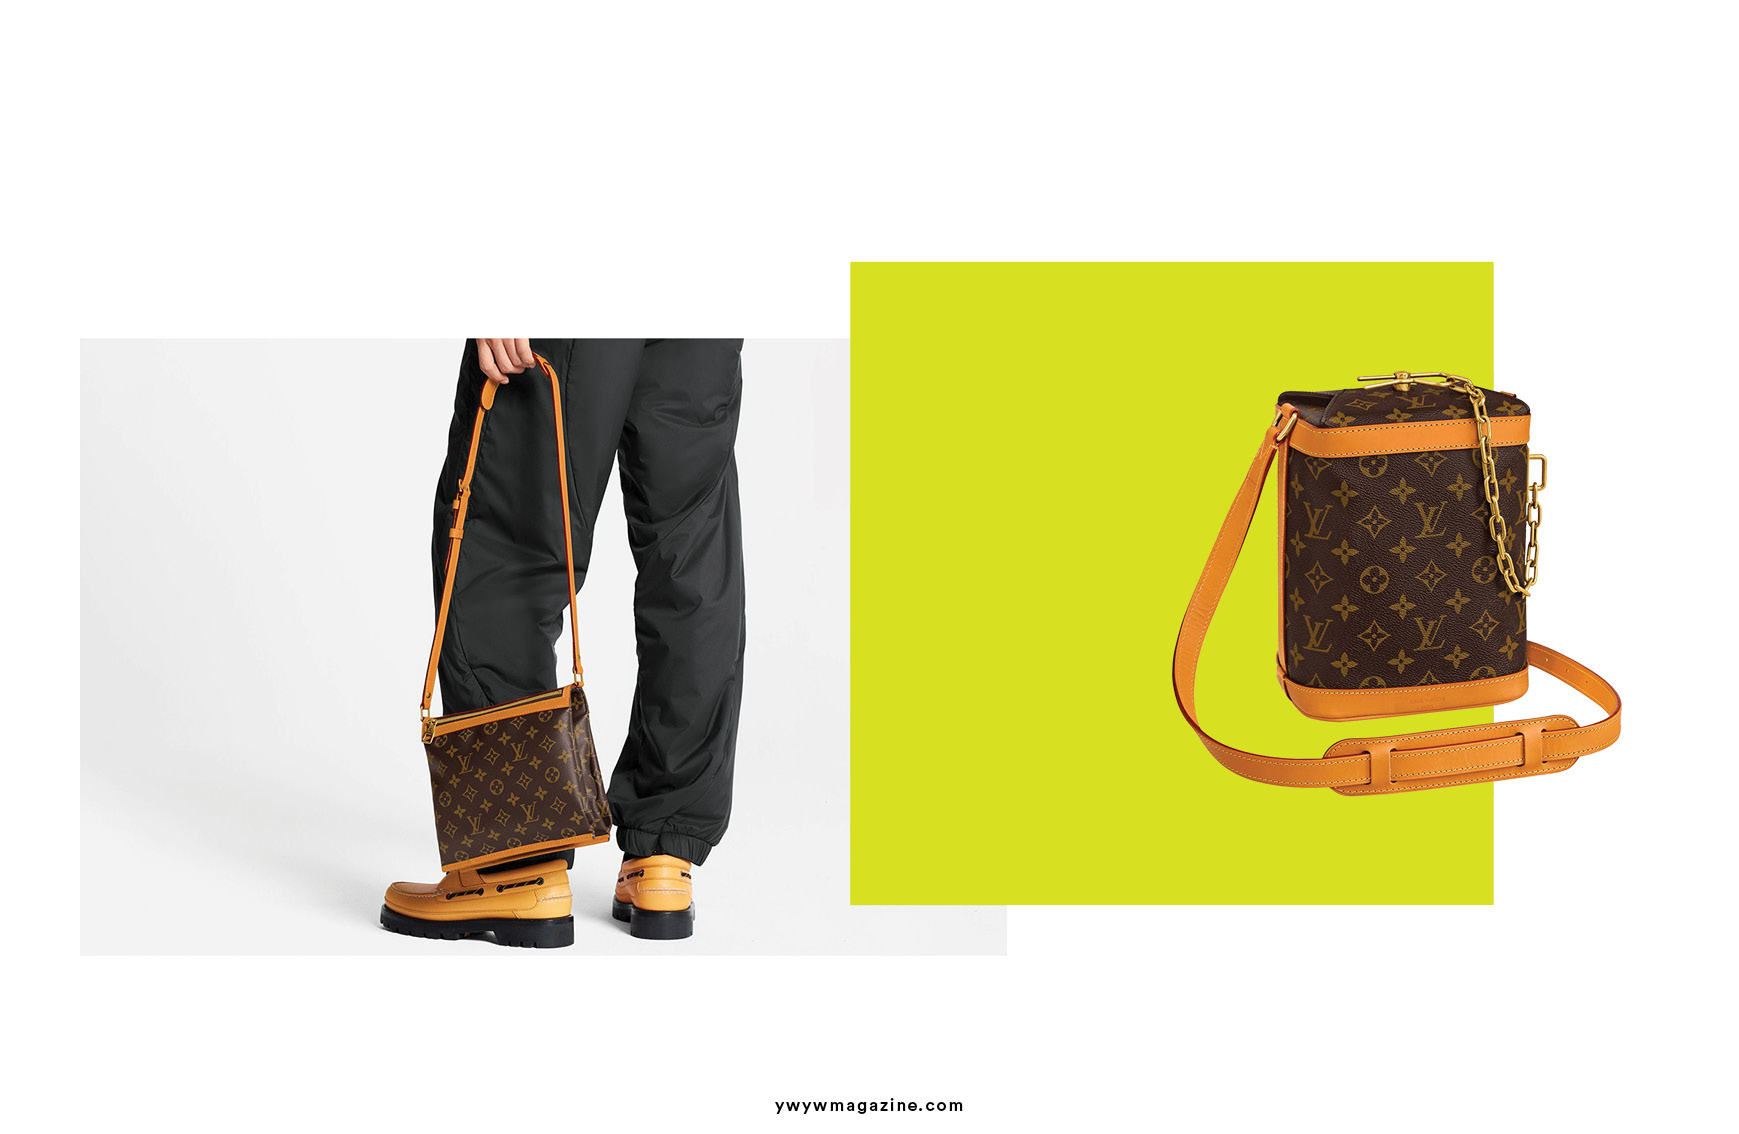 Louis Vuitton Monogram Legacy Milk Box Crossbody Bag - Brown